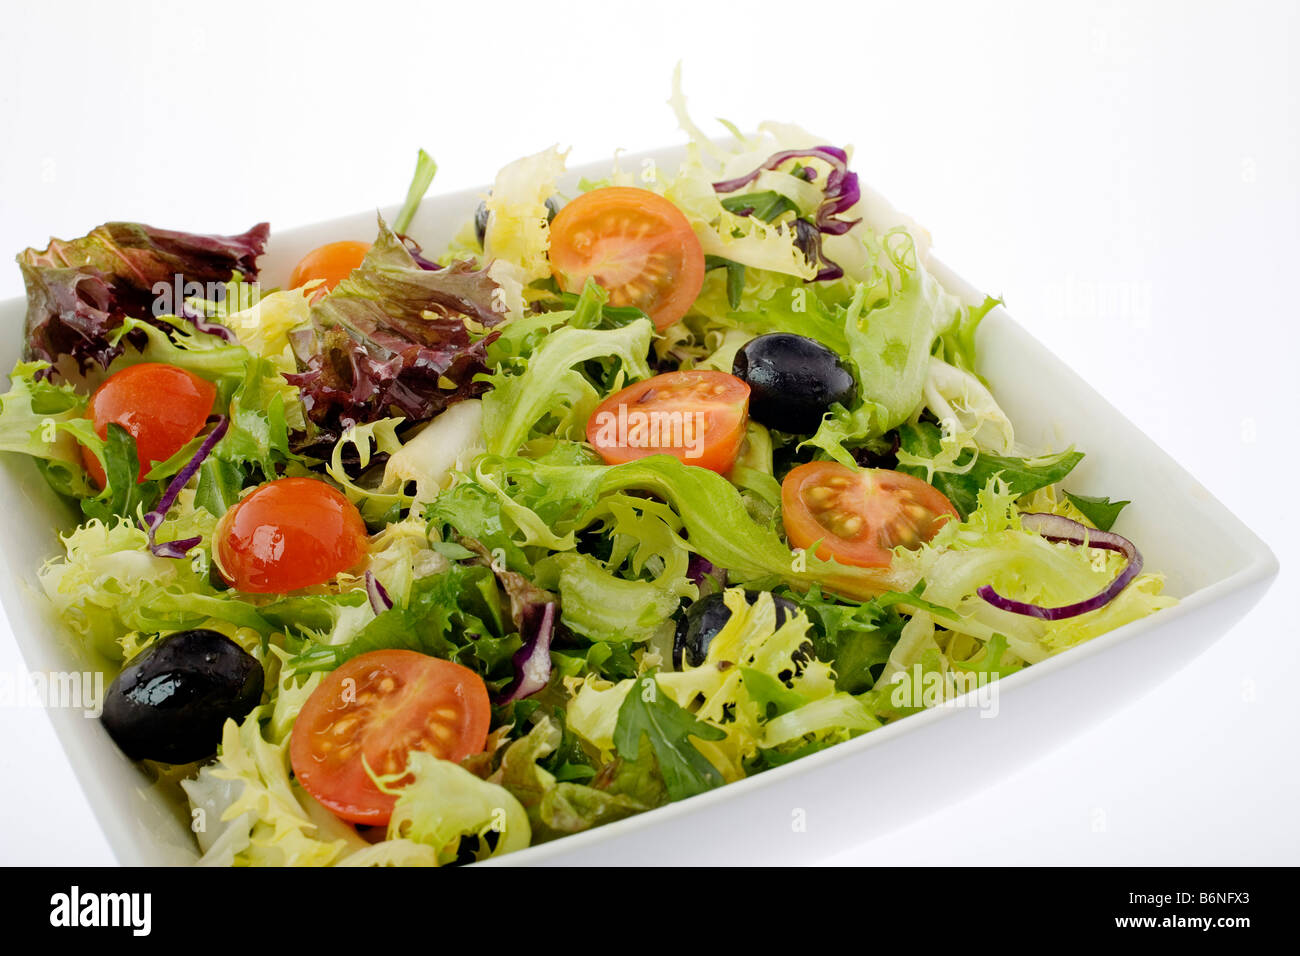 La tipica ensalada de la dieta mediterranea insalata tipici della dieta mediterranea Foto Stock